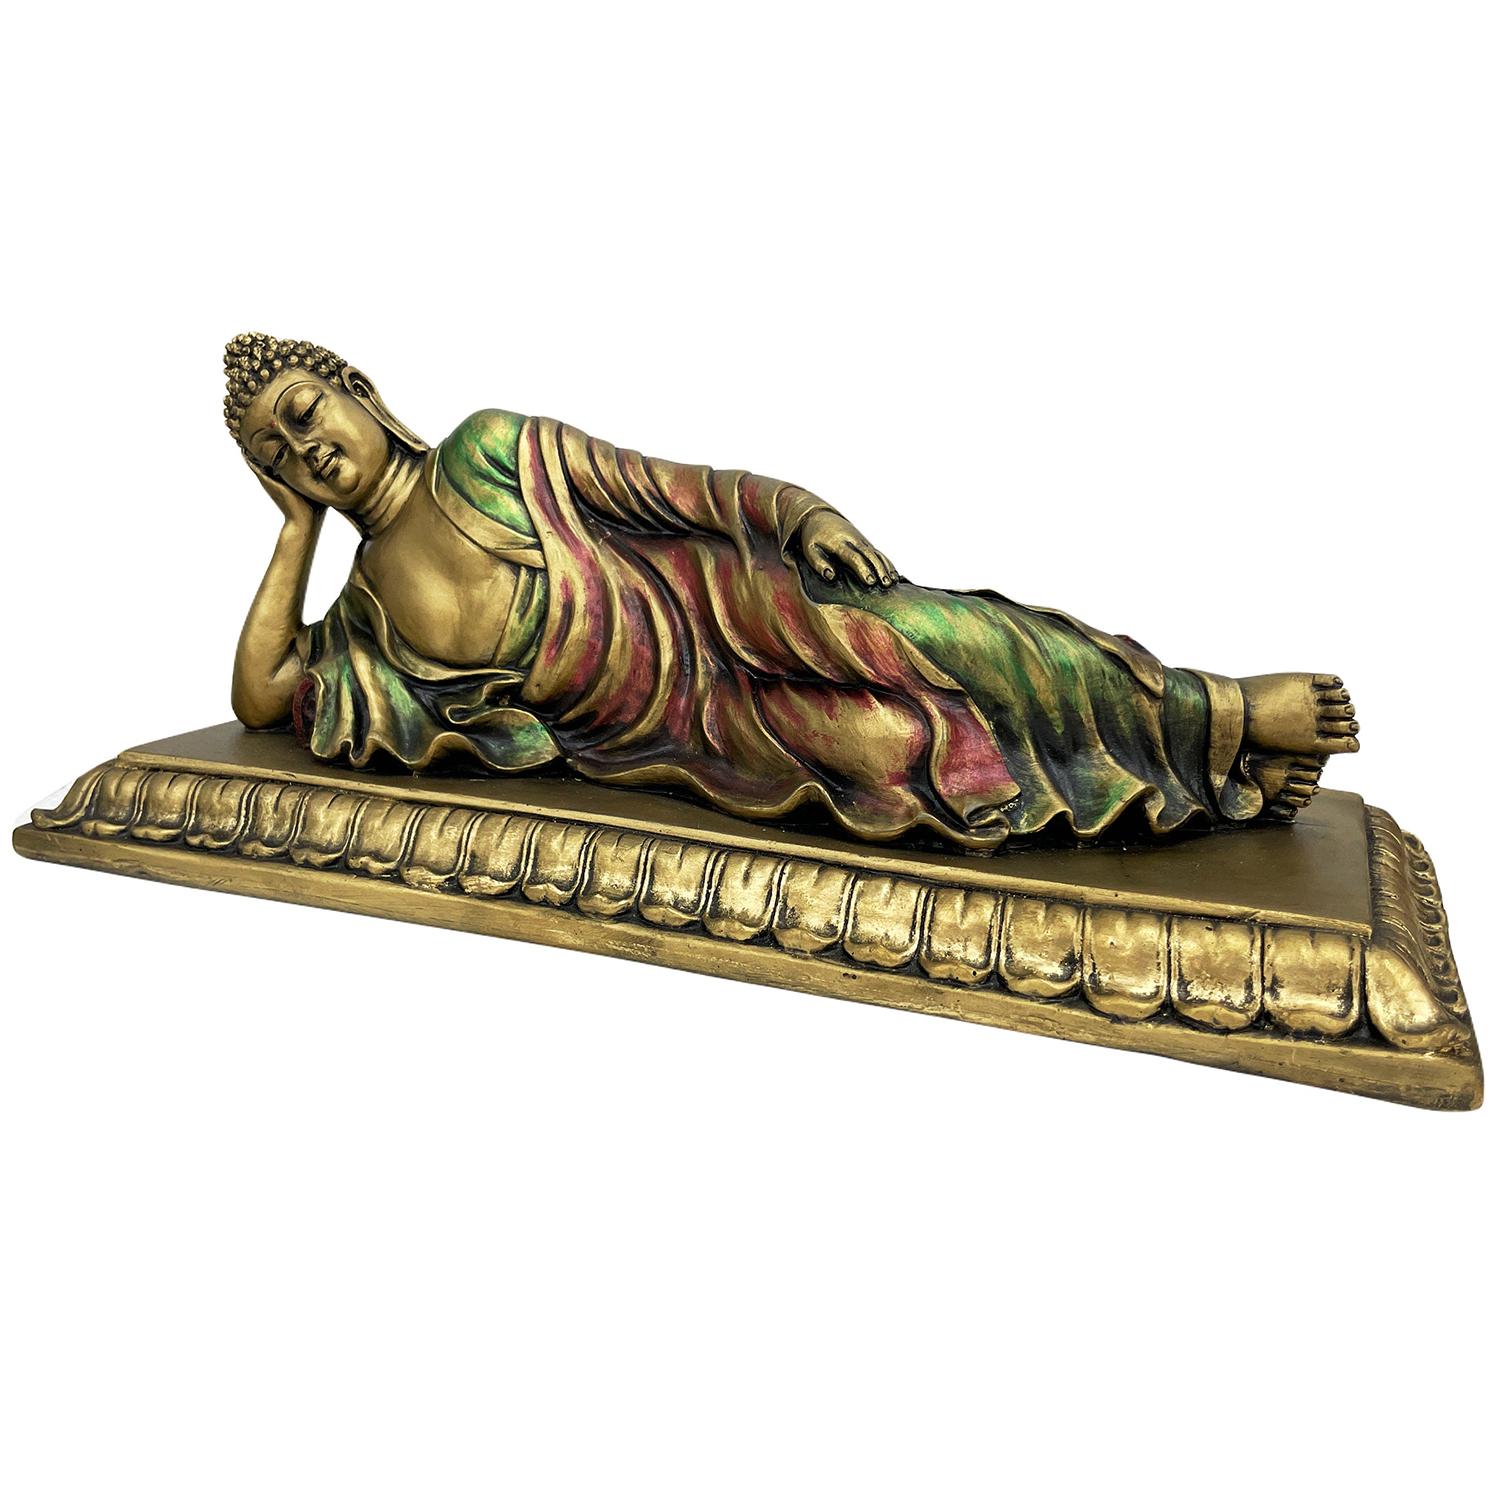 The Lying Buddha Statue